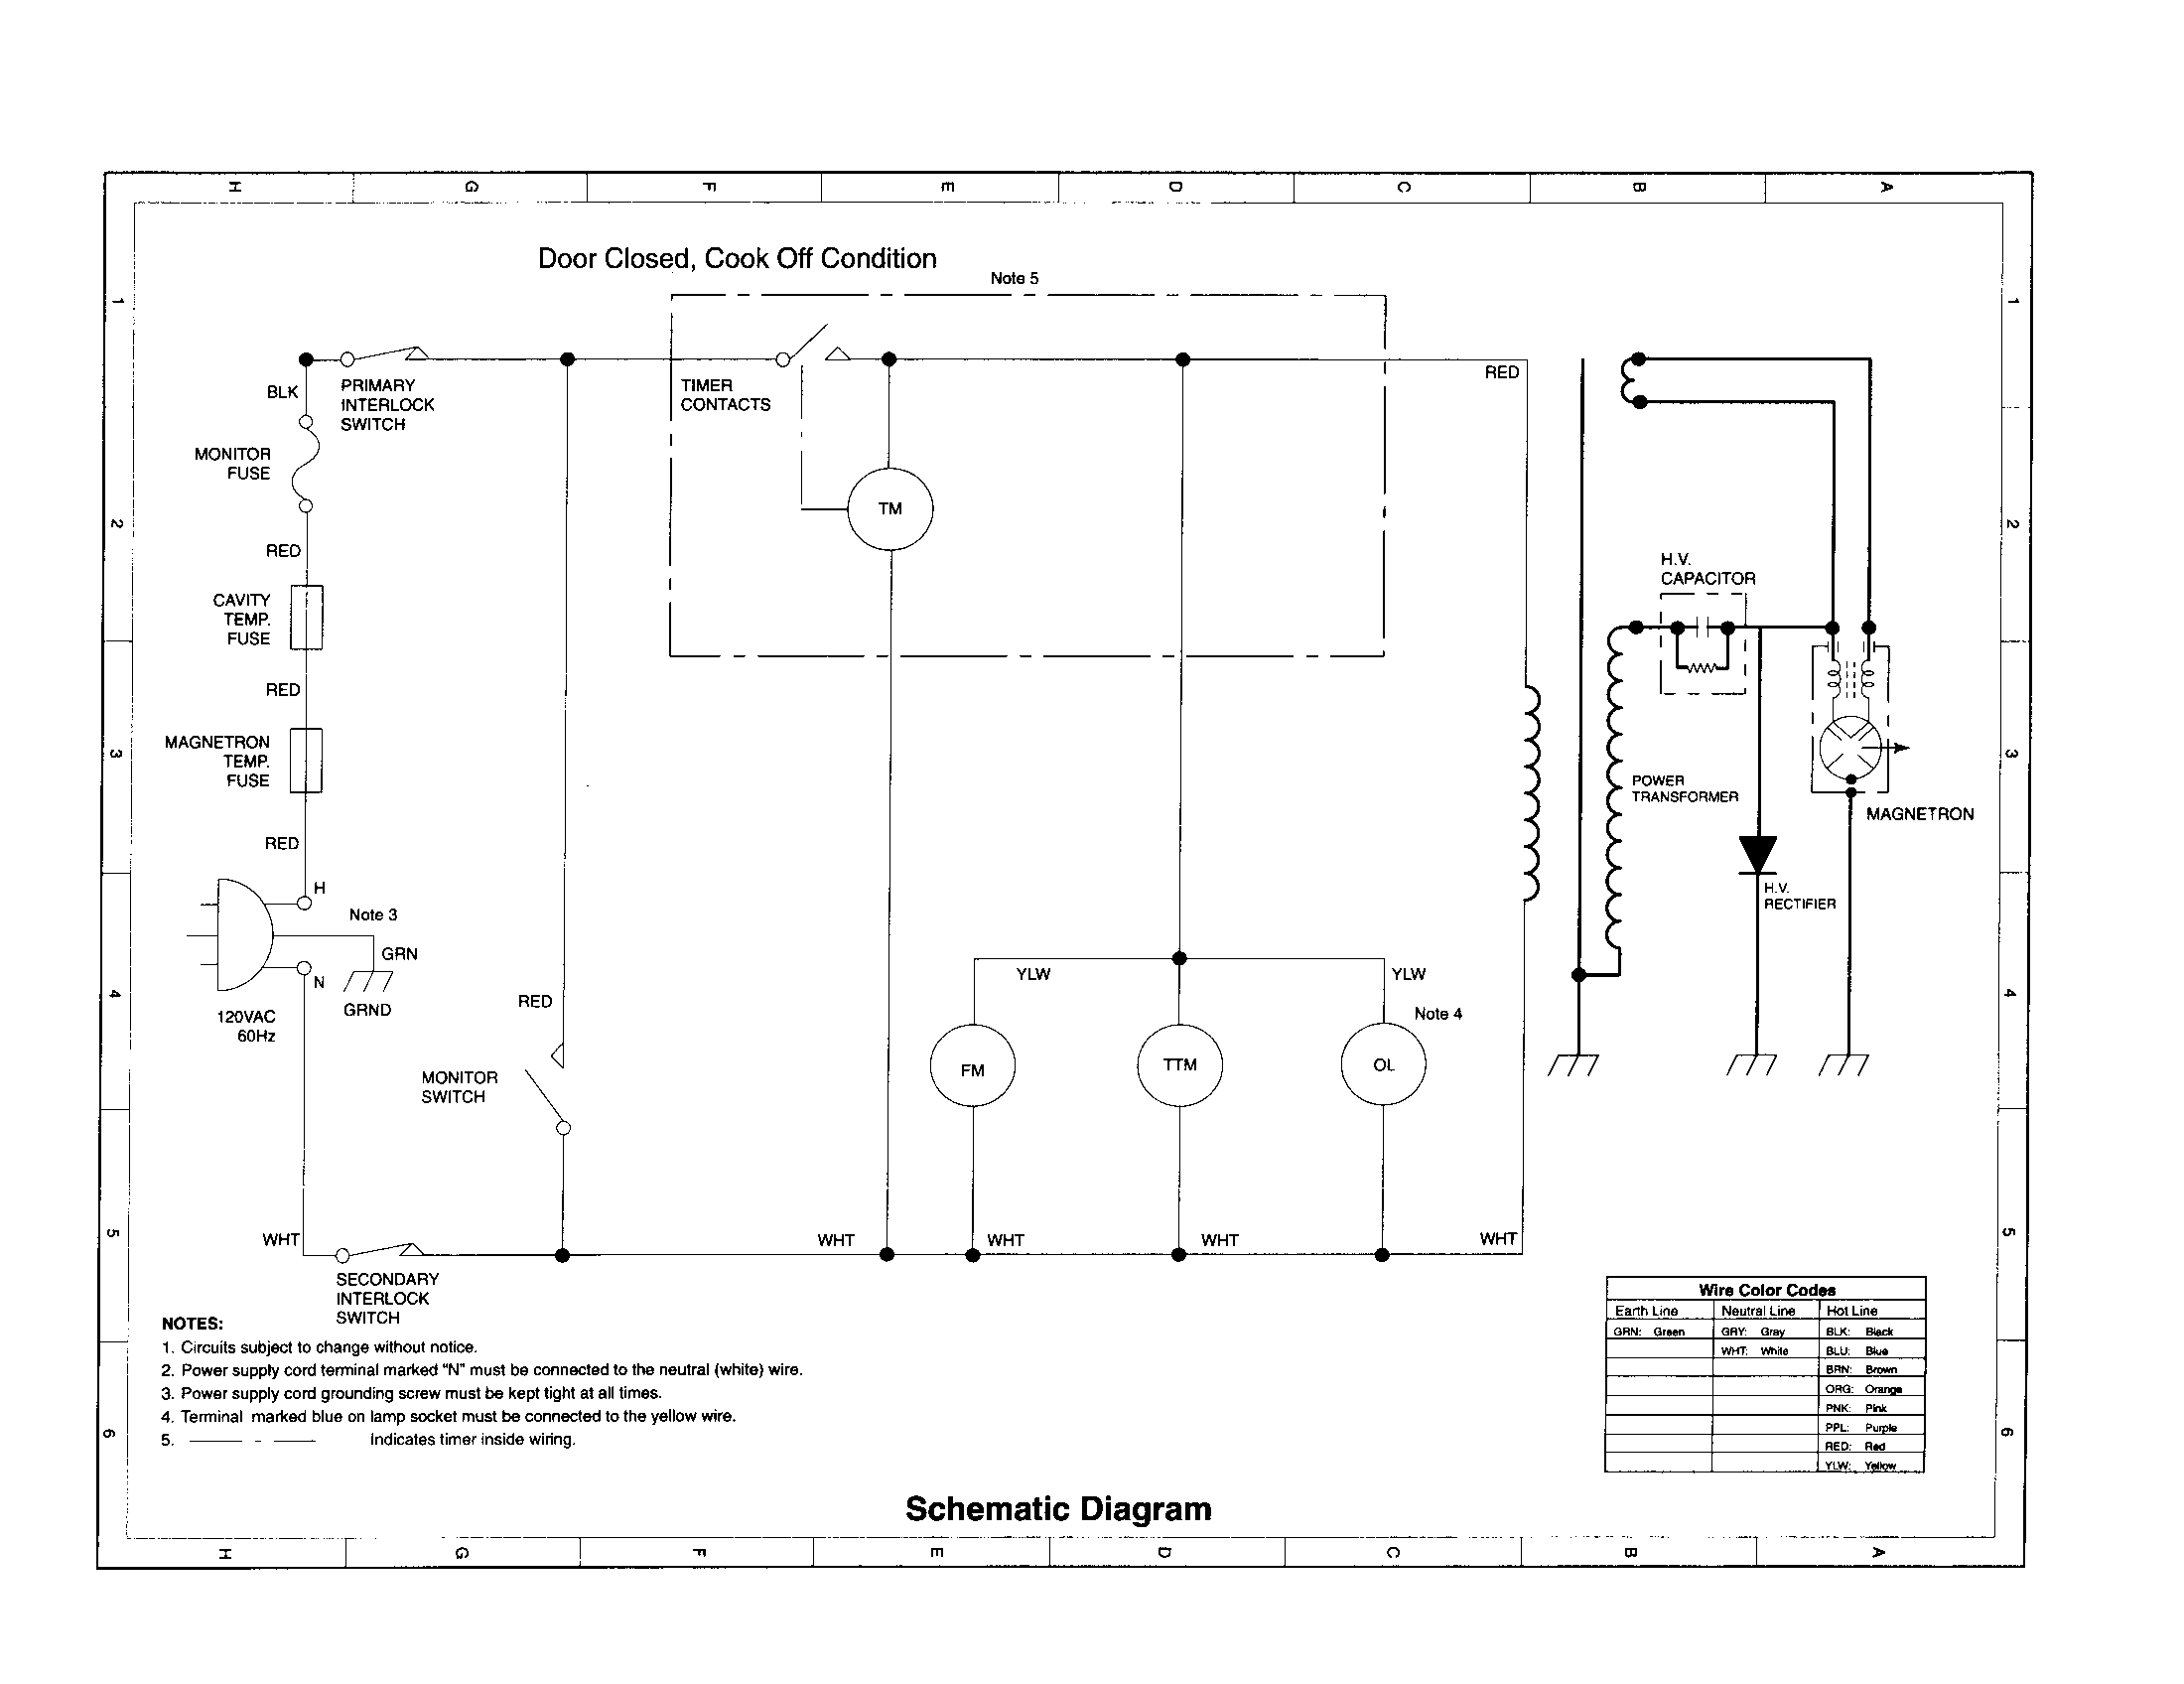 Schematic Diagram  U0026 Parts List For Model R2m56 Sharp